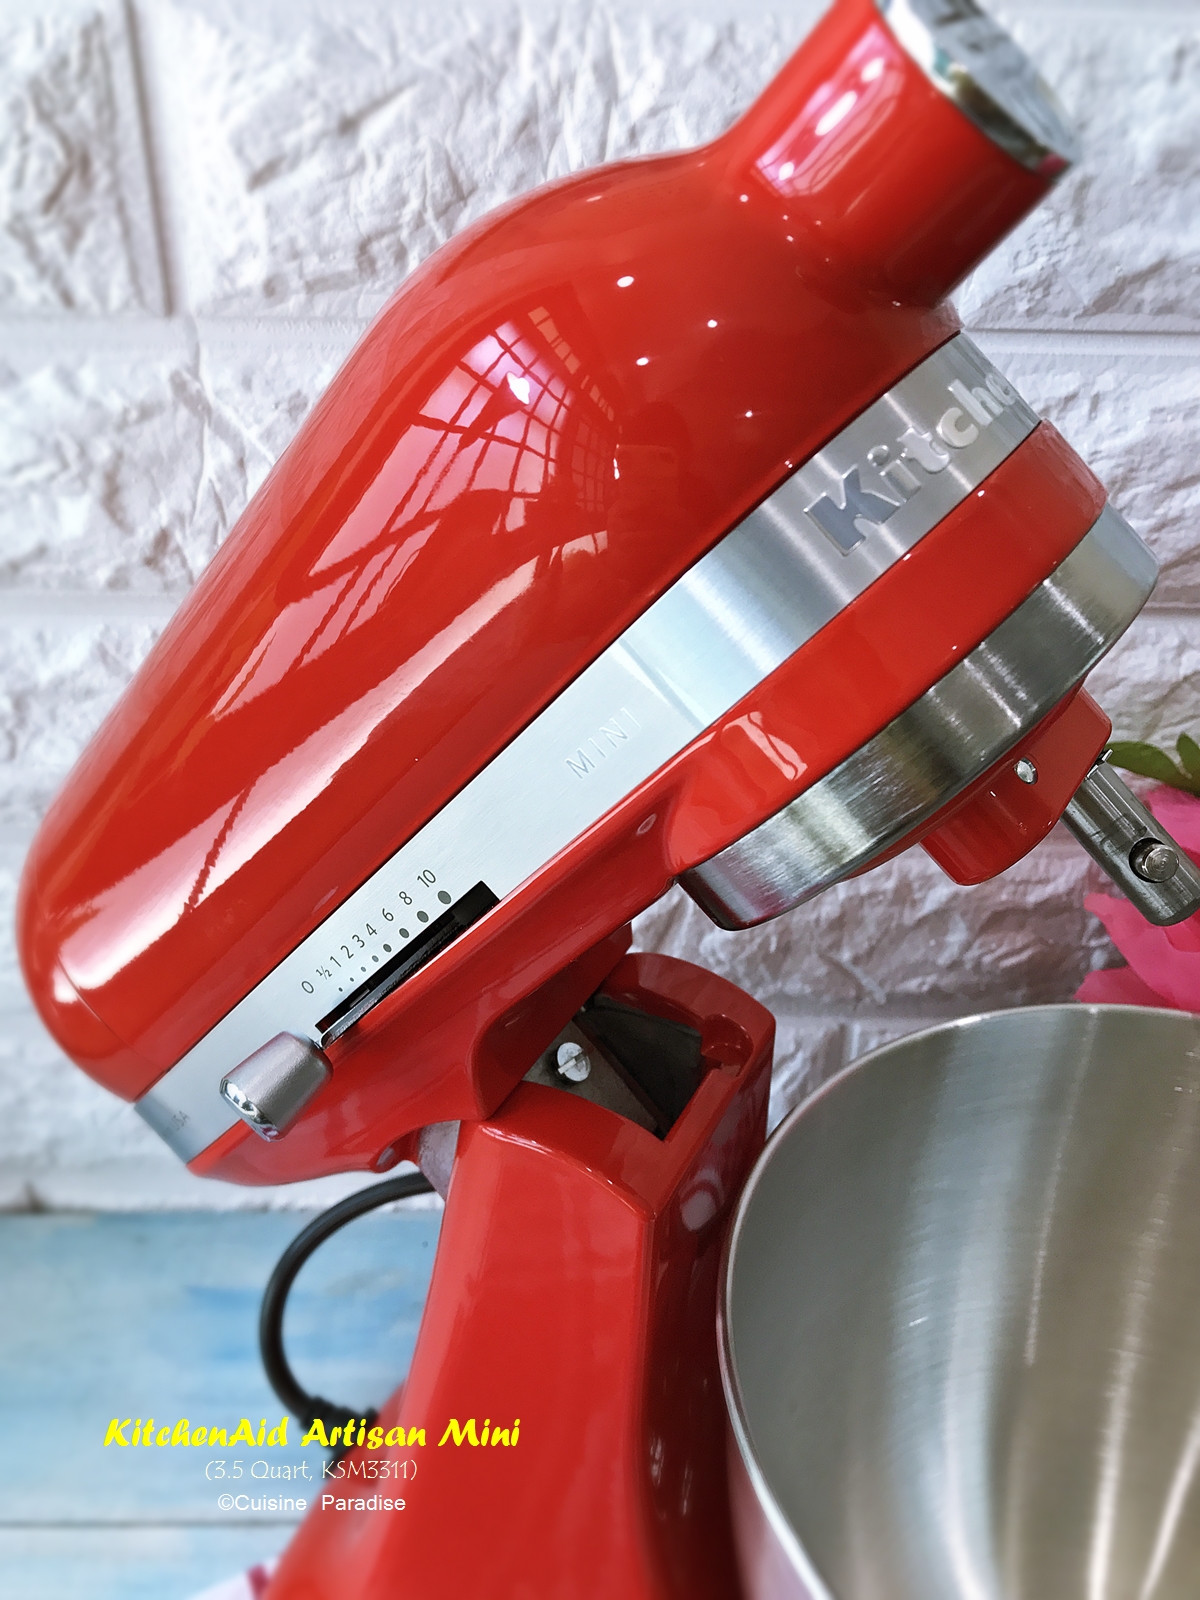 KitchenAid Artisan Mini 3.5 Quart Tilt-Head Stand Mixer features a